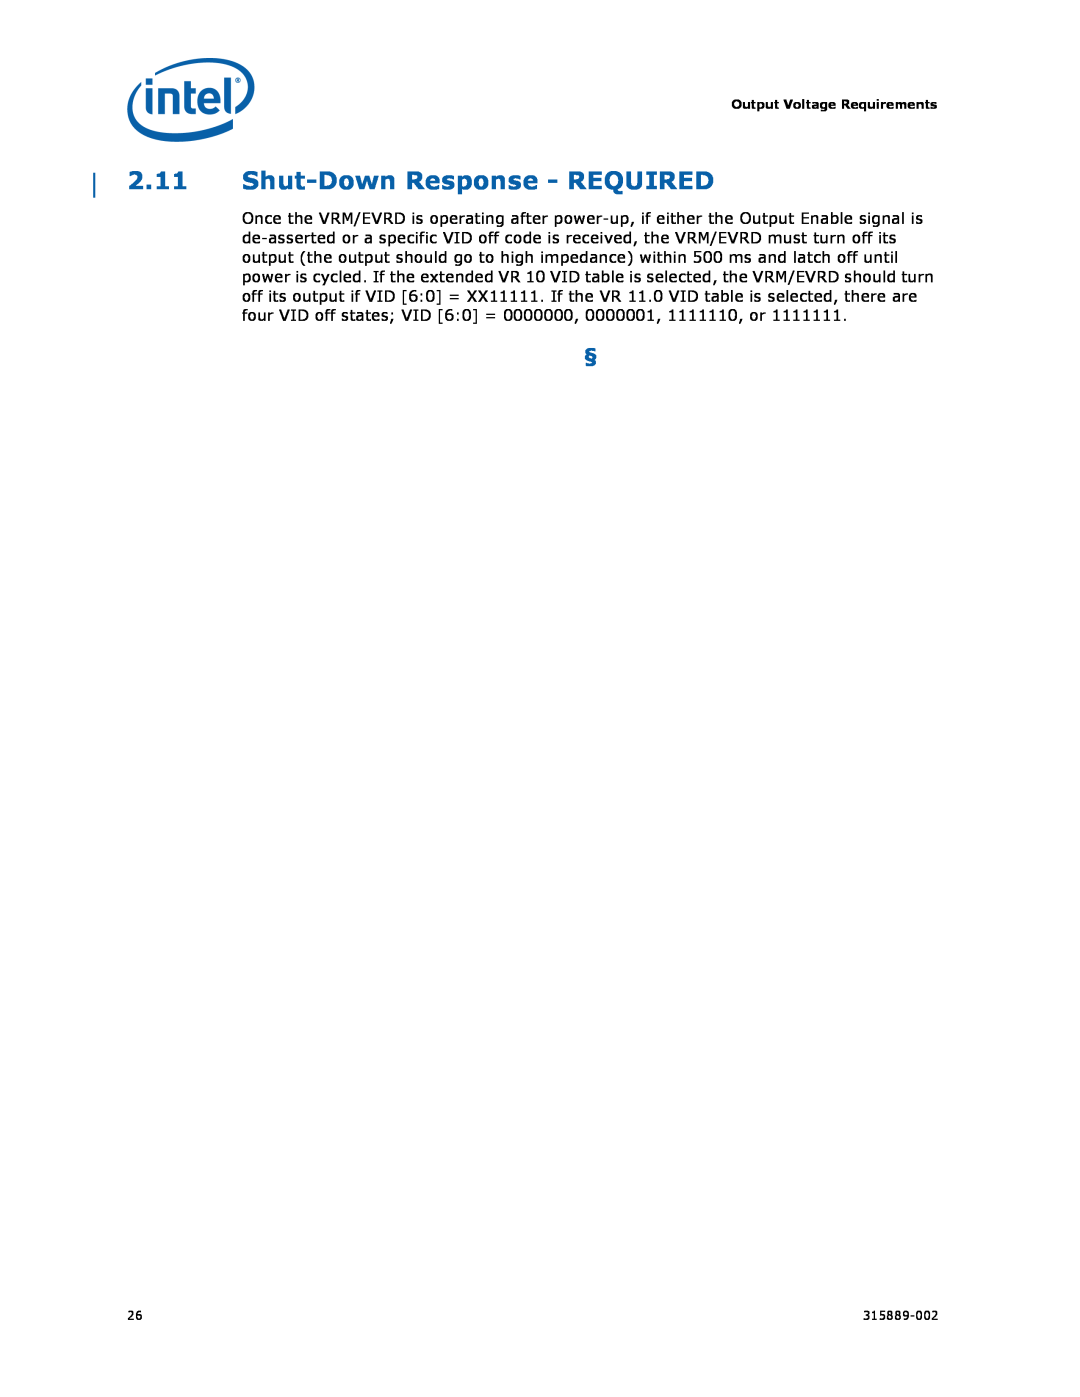 Intel 315889-002 manual 2.11Shut-DownResponse - REQUIRED 